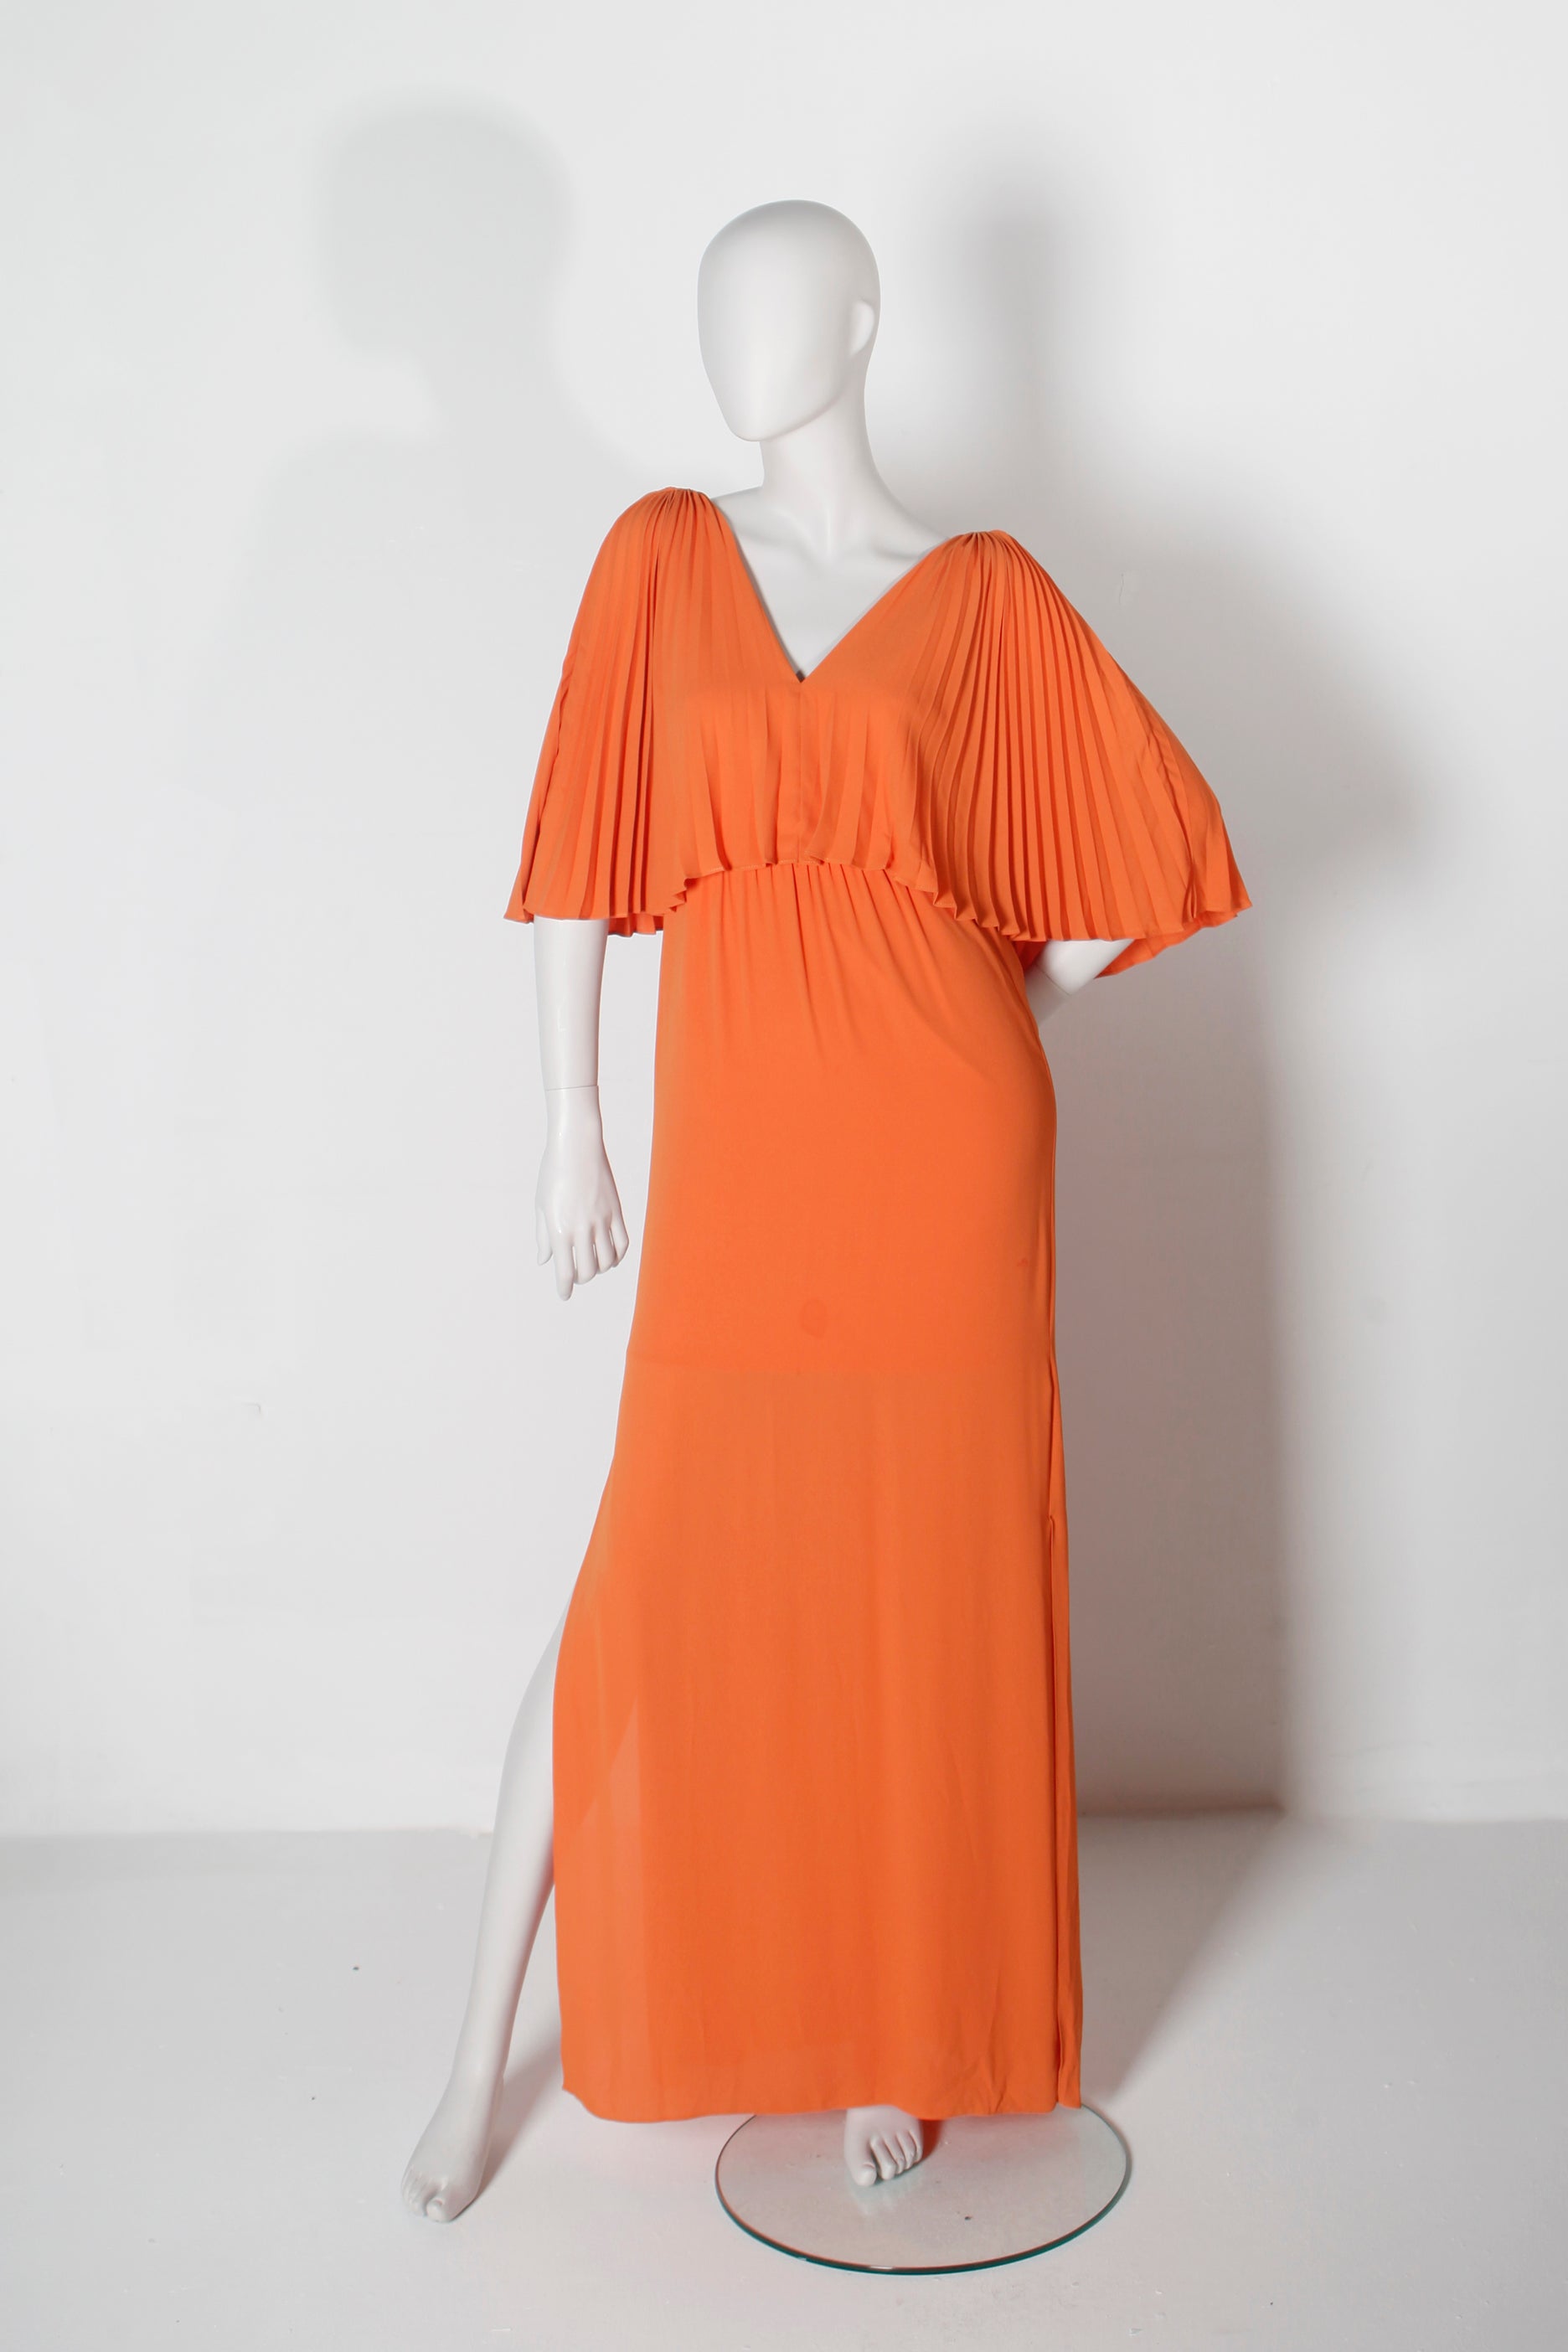 Orange Pleated Halston Gown